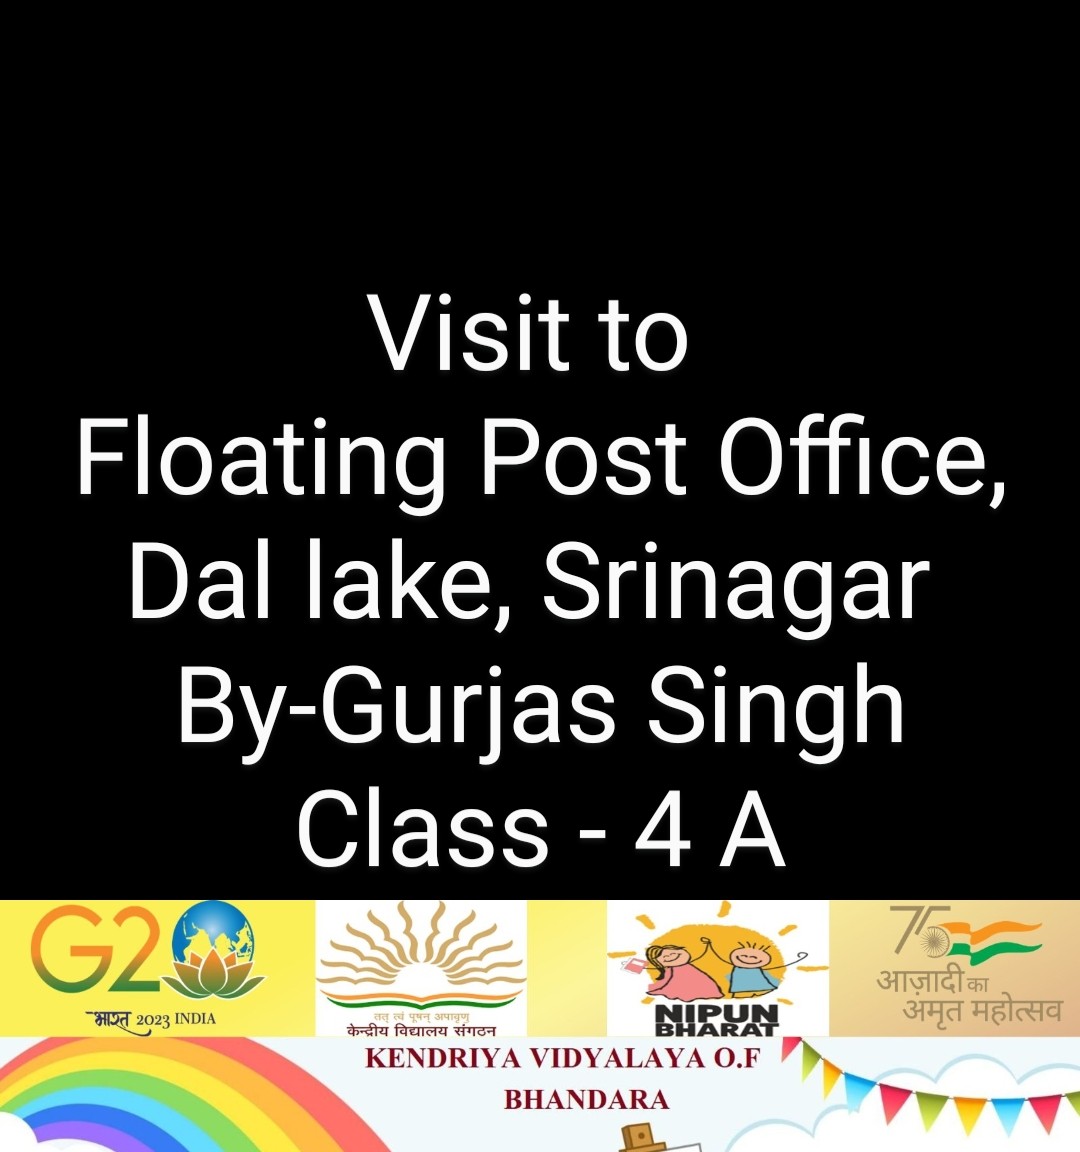 Just after G20 meet at Srinagar, Master Gurjas singh of class 4 A, of KV OF BHANDARA visited floating post office at Dal lake srinagar.
@KvsMumbai 
@KVS_HQ 
@KVOFBHANDARA 
#G20janbhagidari 
#kvs
#india
#ekbharat